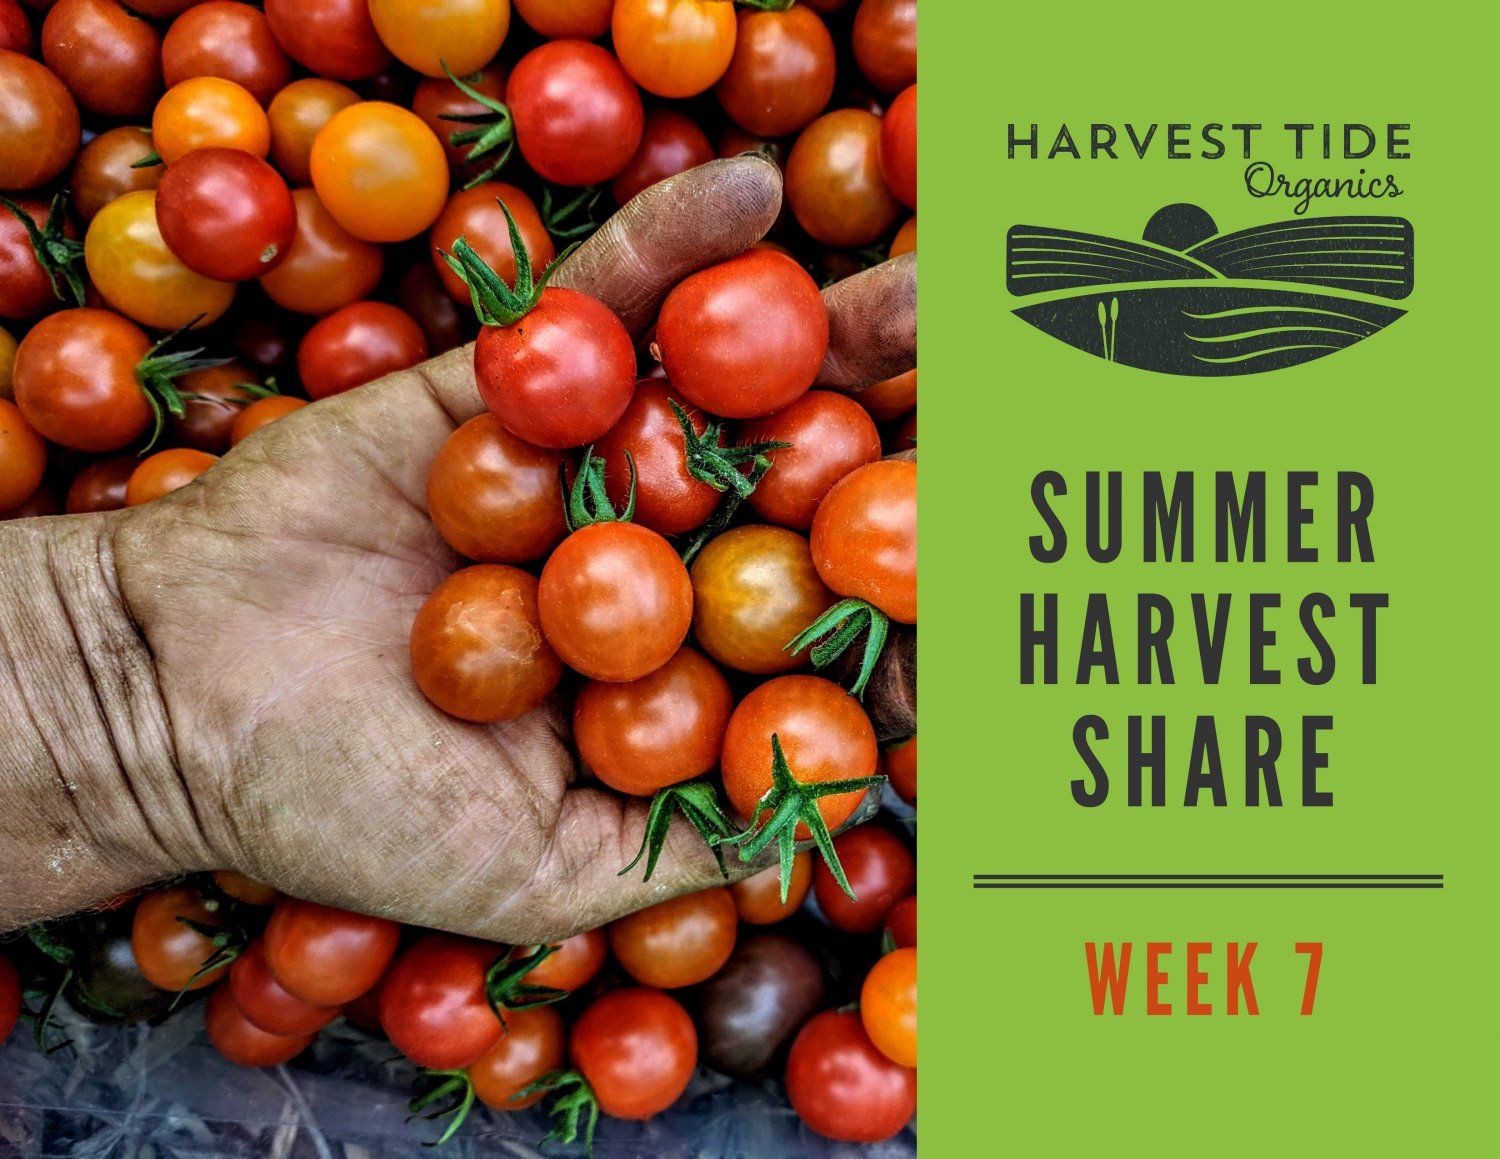 Next Happening: Summer Harvest Share - Week 7